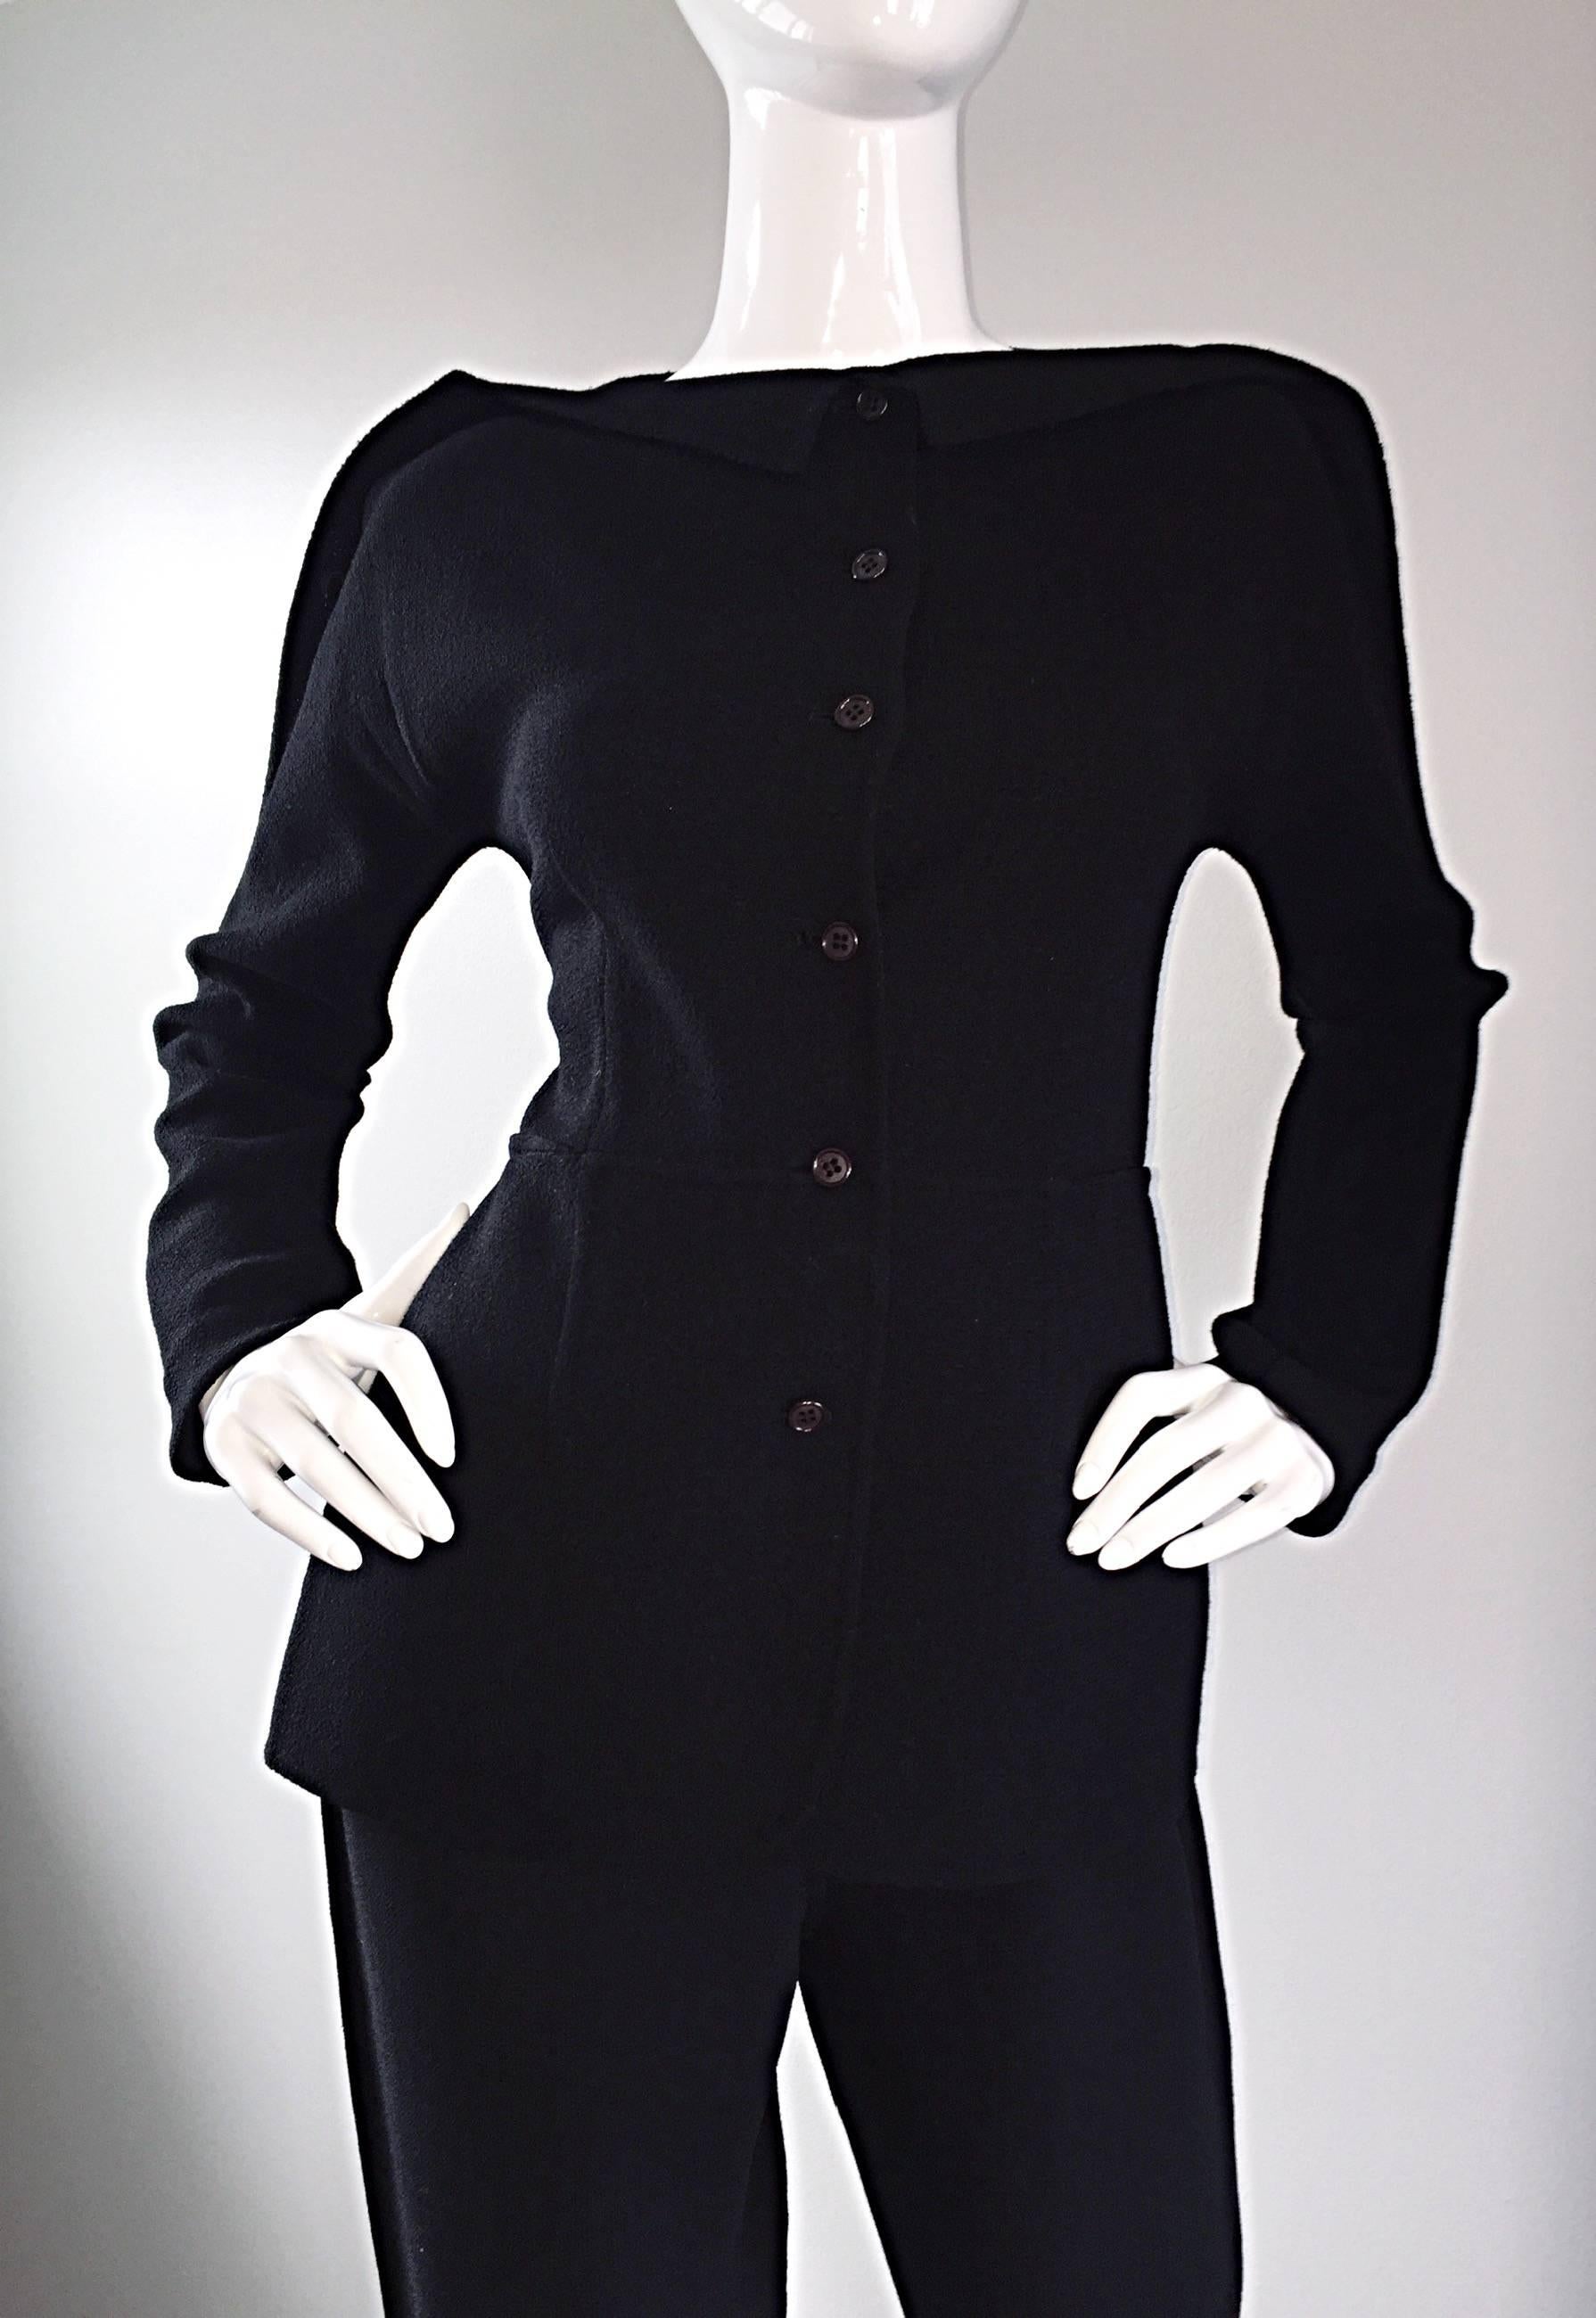 1990s Geoffrey Beene Black Crepe Avant Garde Jacket and Pants Suit Ensemble For Sale 4